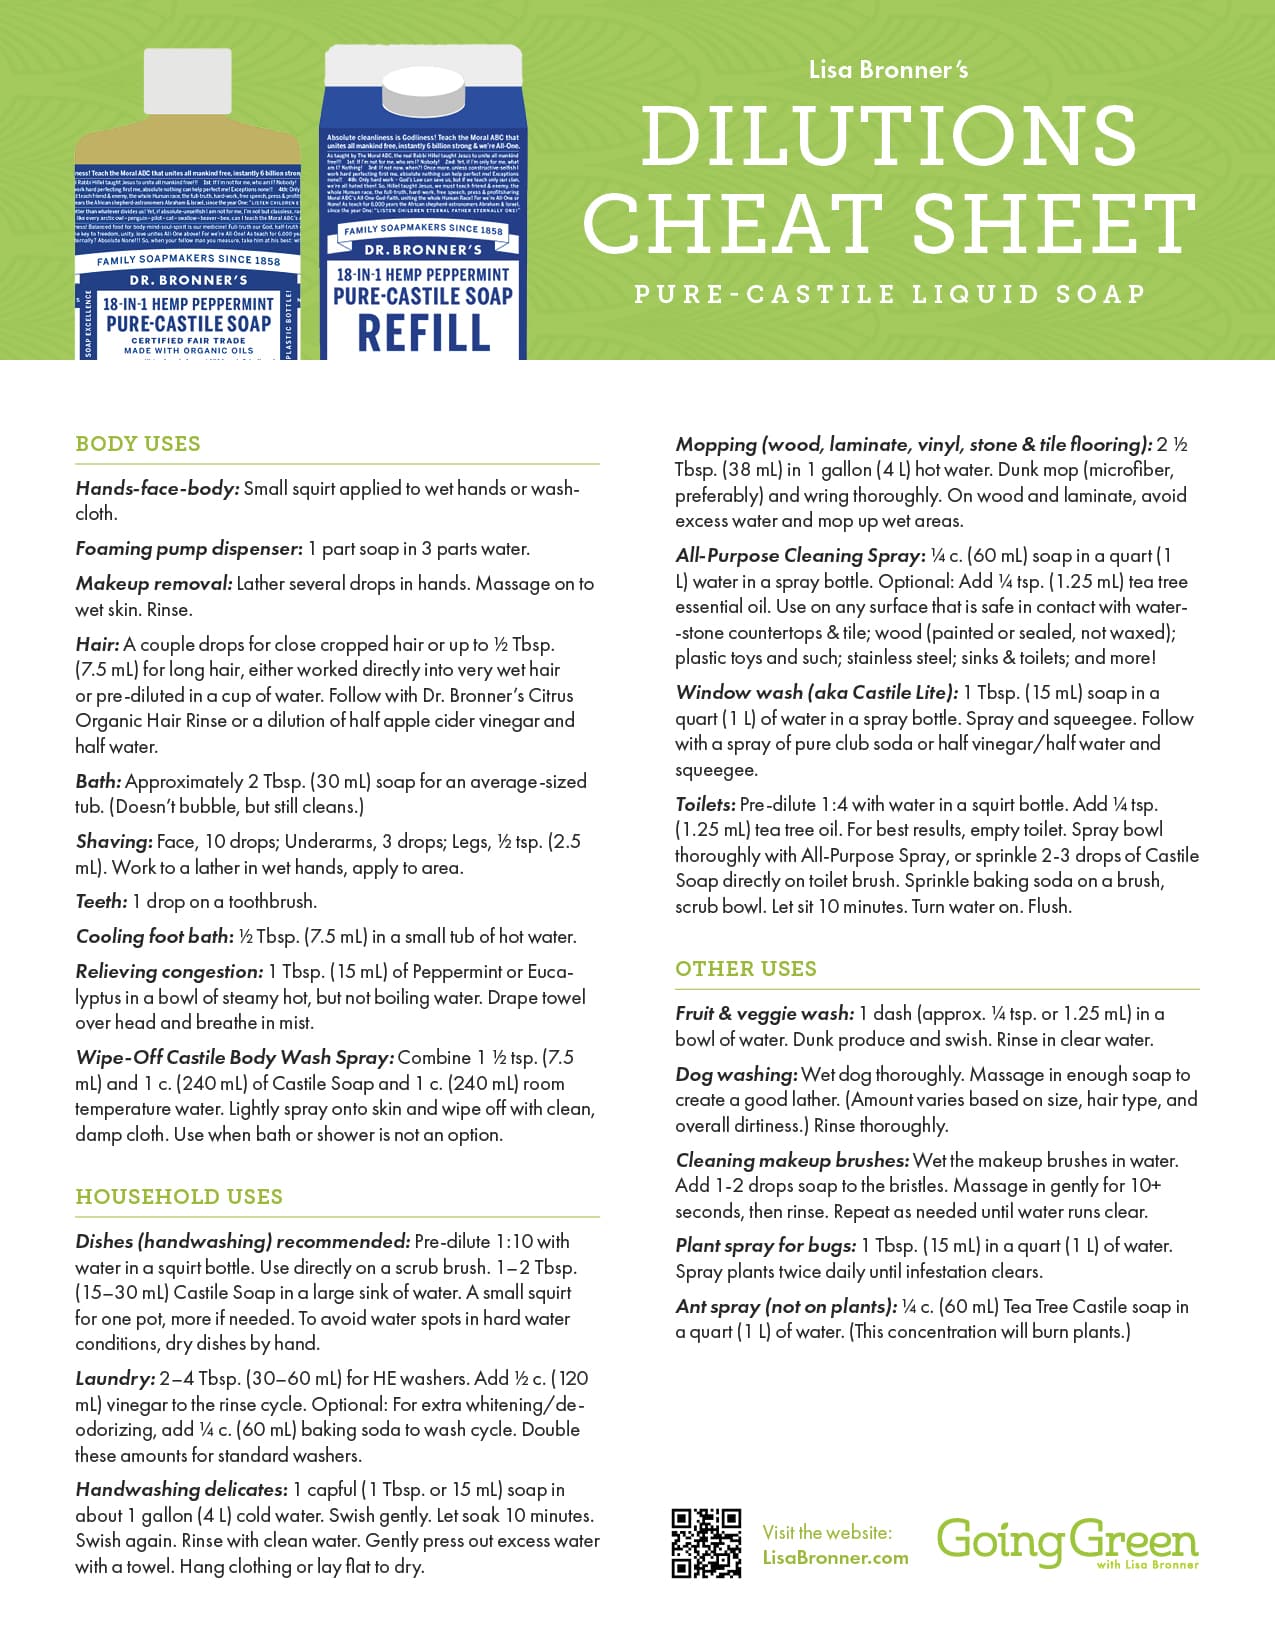 Retail Media cheat sheet: Ways to get found on leading U.S.